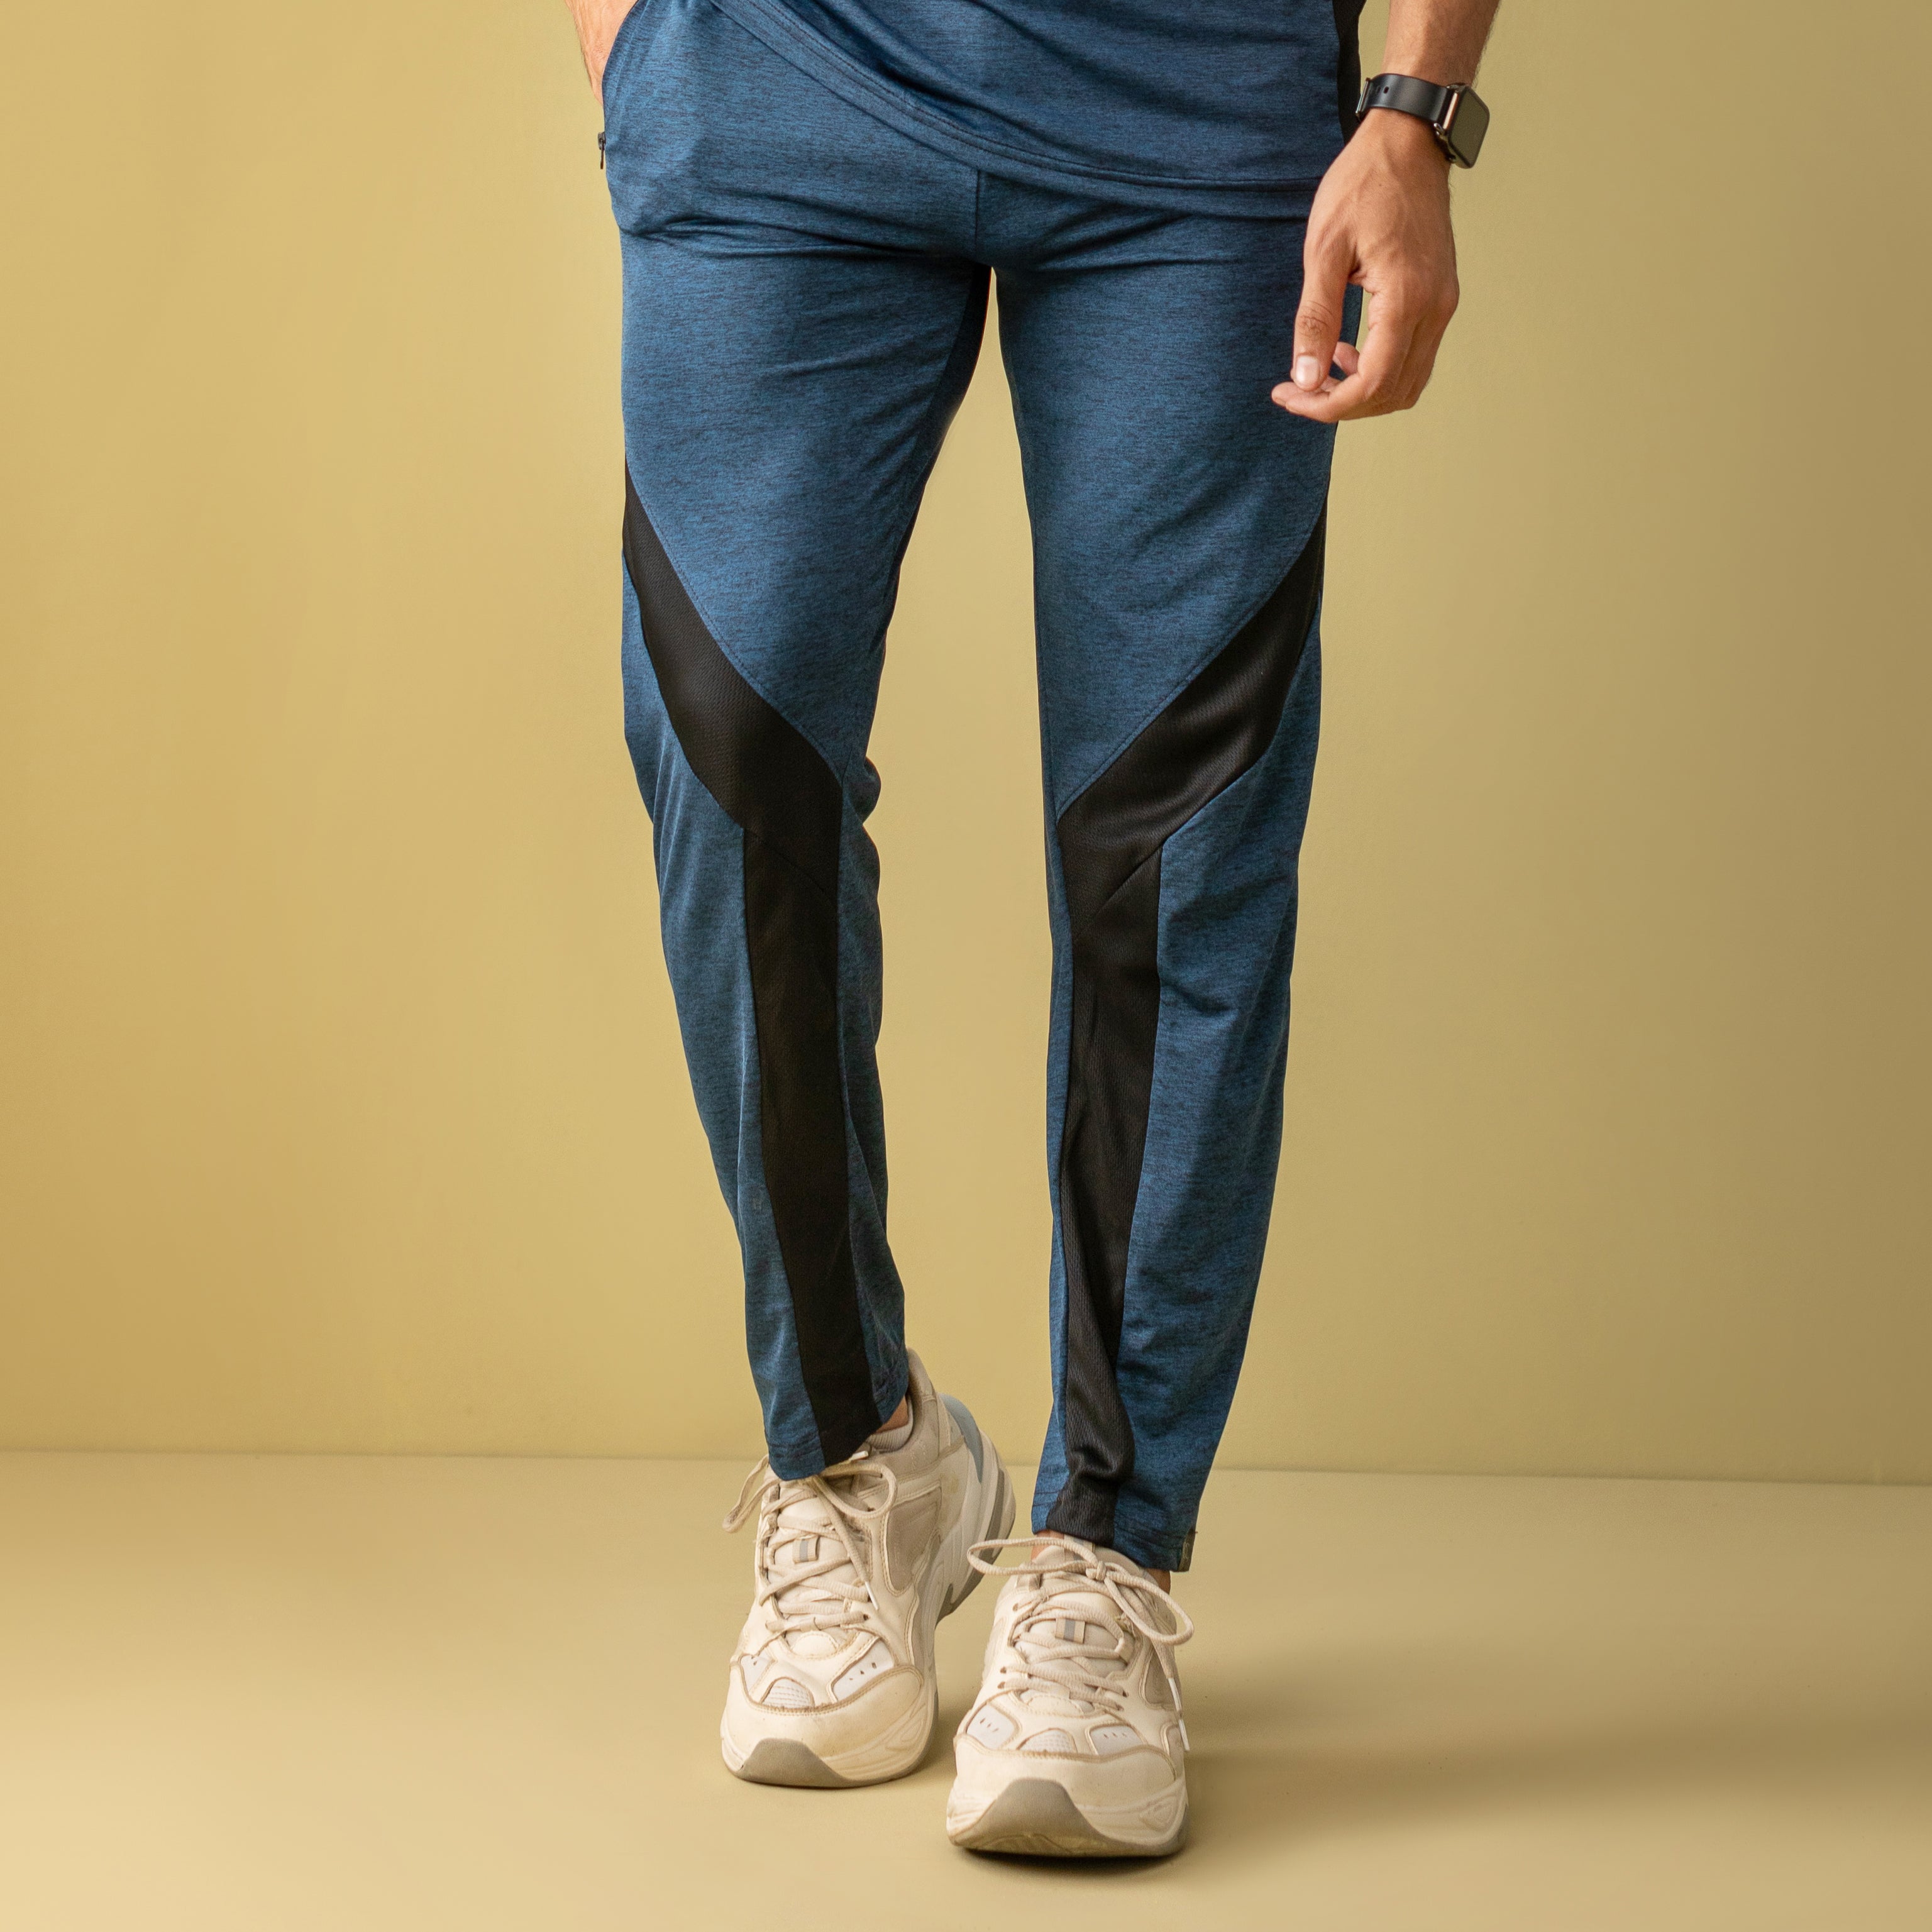 BROKIG Men's Lightweight Workout Track Pants Gym Jogger Pants Slim Fit  Running Activewear Pants with Zip Pocket(Army Green,L) price in UAE |  Amazon UAE | kanbkam